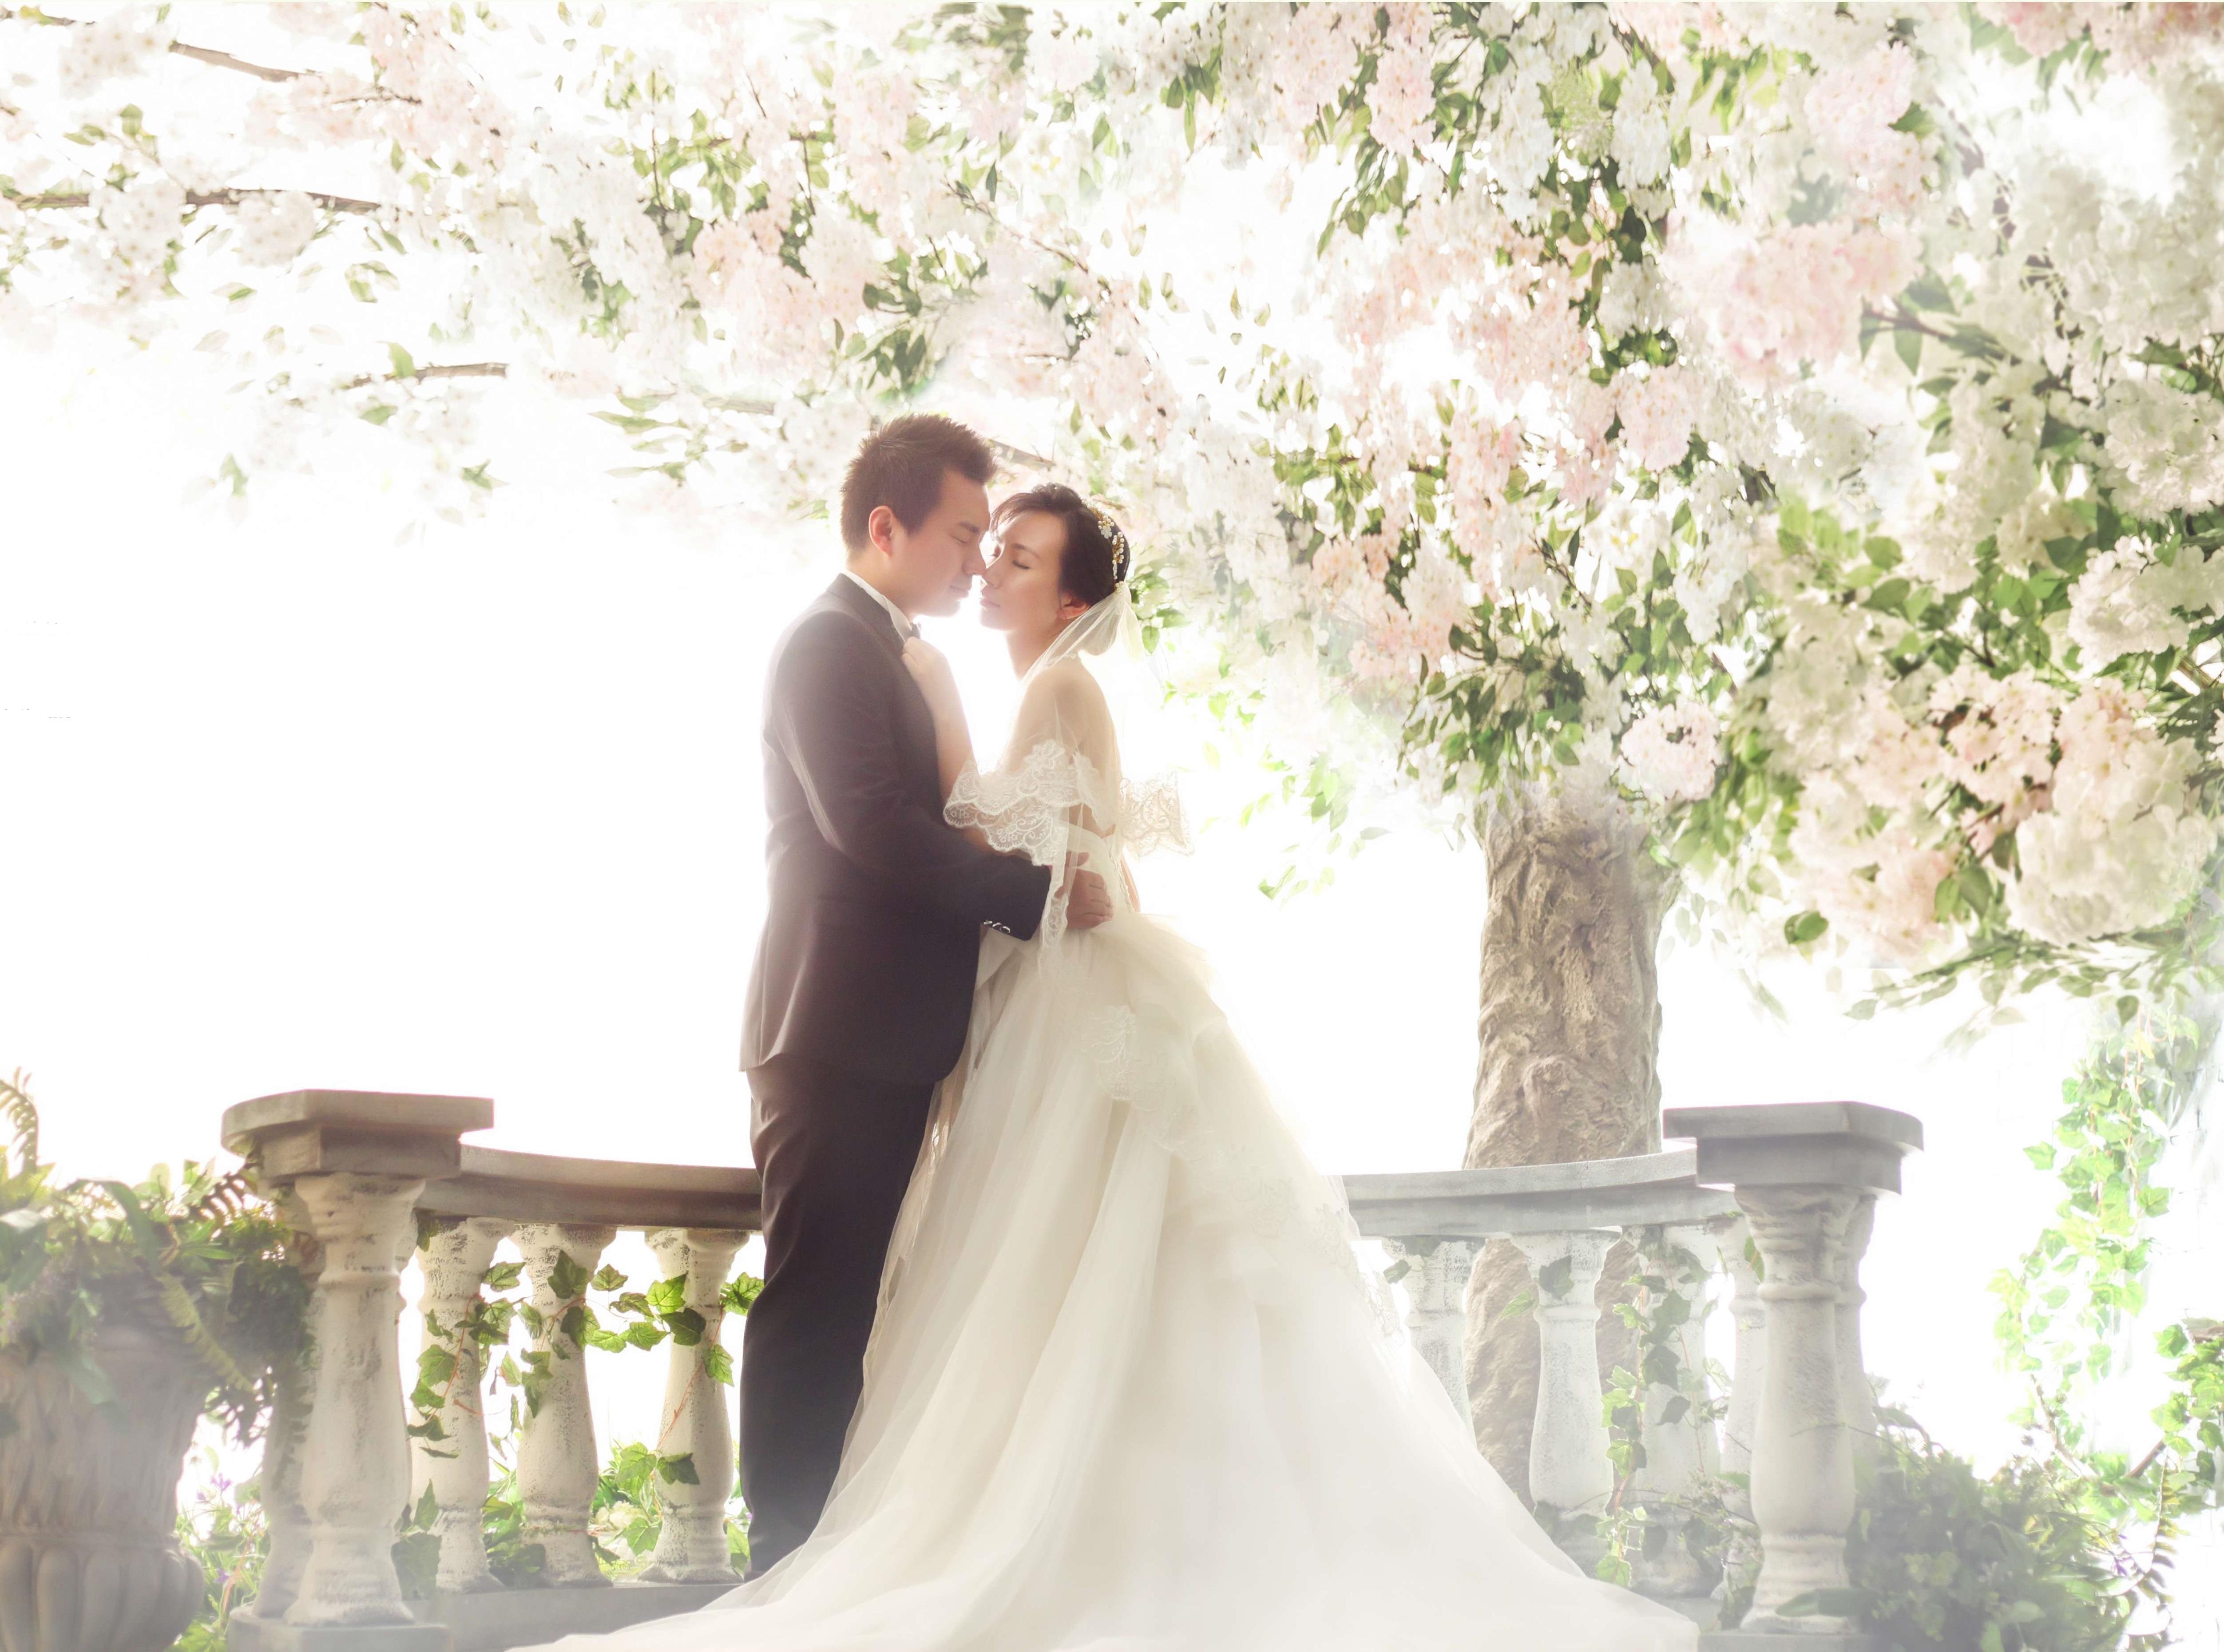 The Wedding Website of Bingjie Xue and Eric Shao